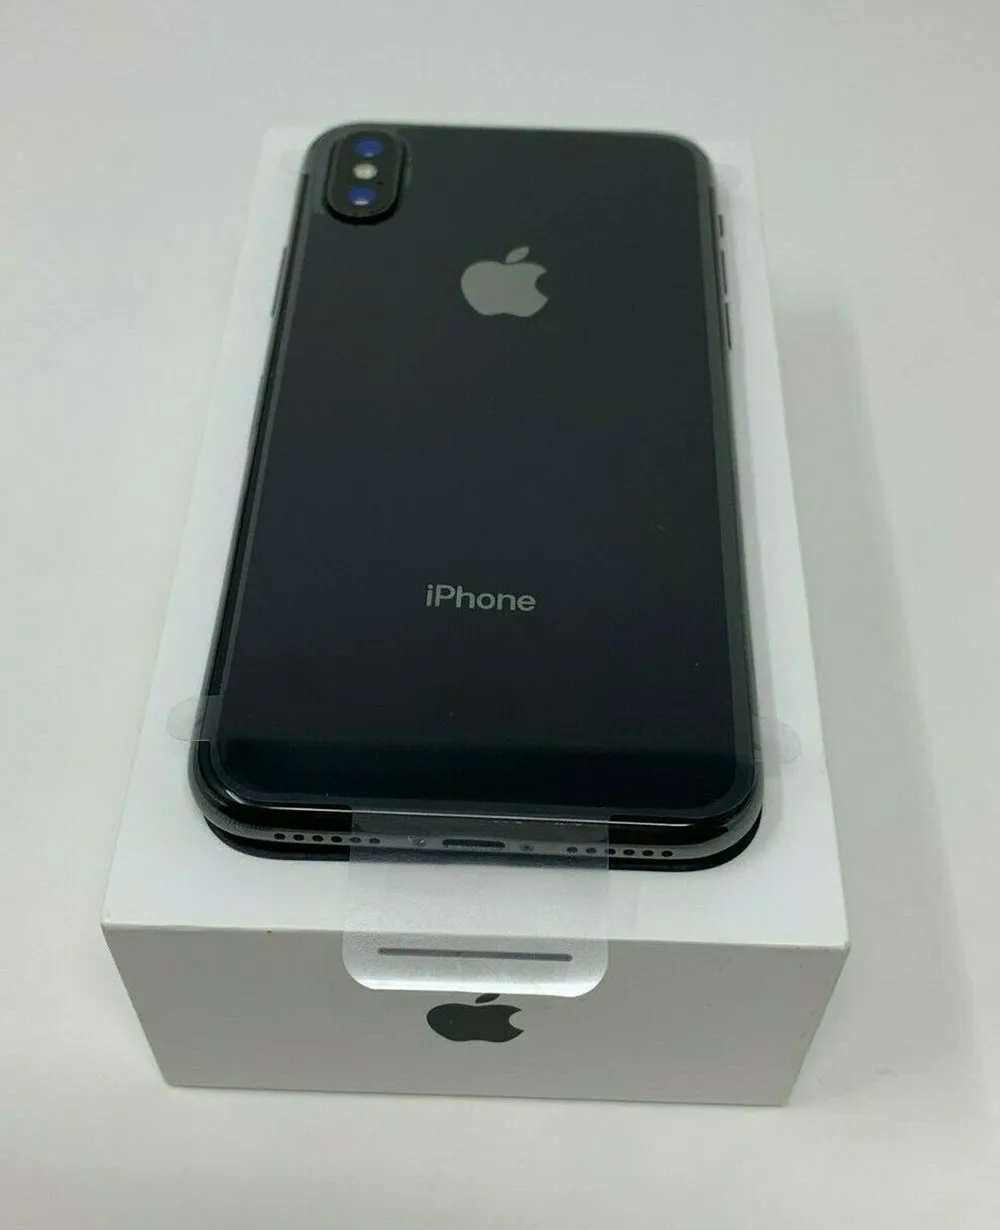 Genuine Apple iPhone X 5.8" Face ID 64/256GB A11 Hexa Core Smartphone Original Unlocked 4G LTE iPhoneX Cell Phone